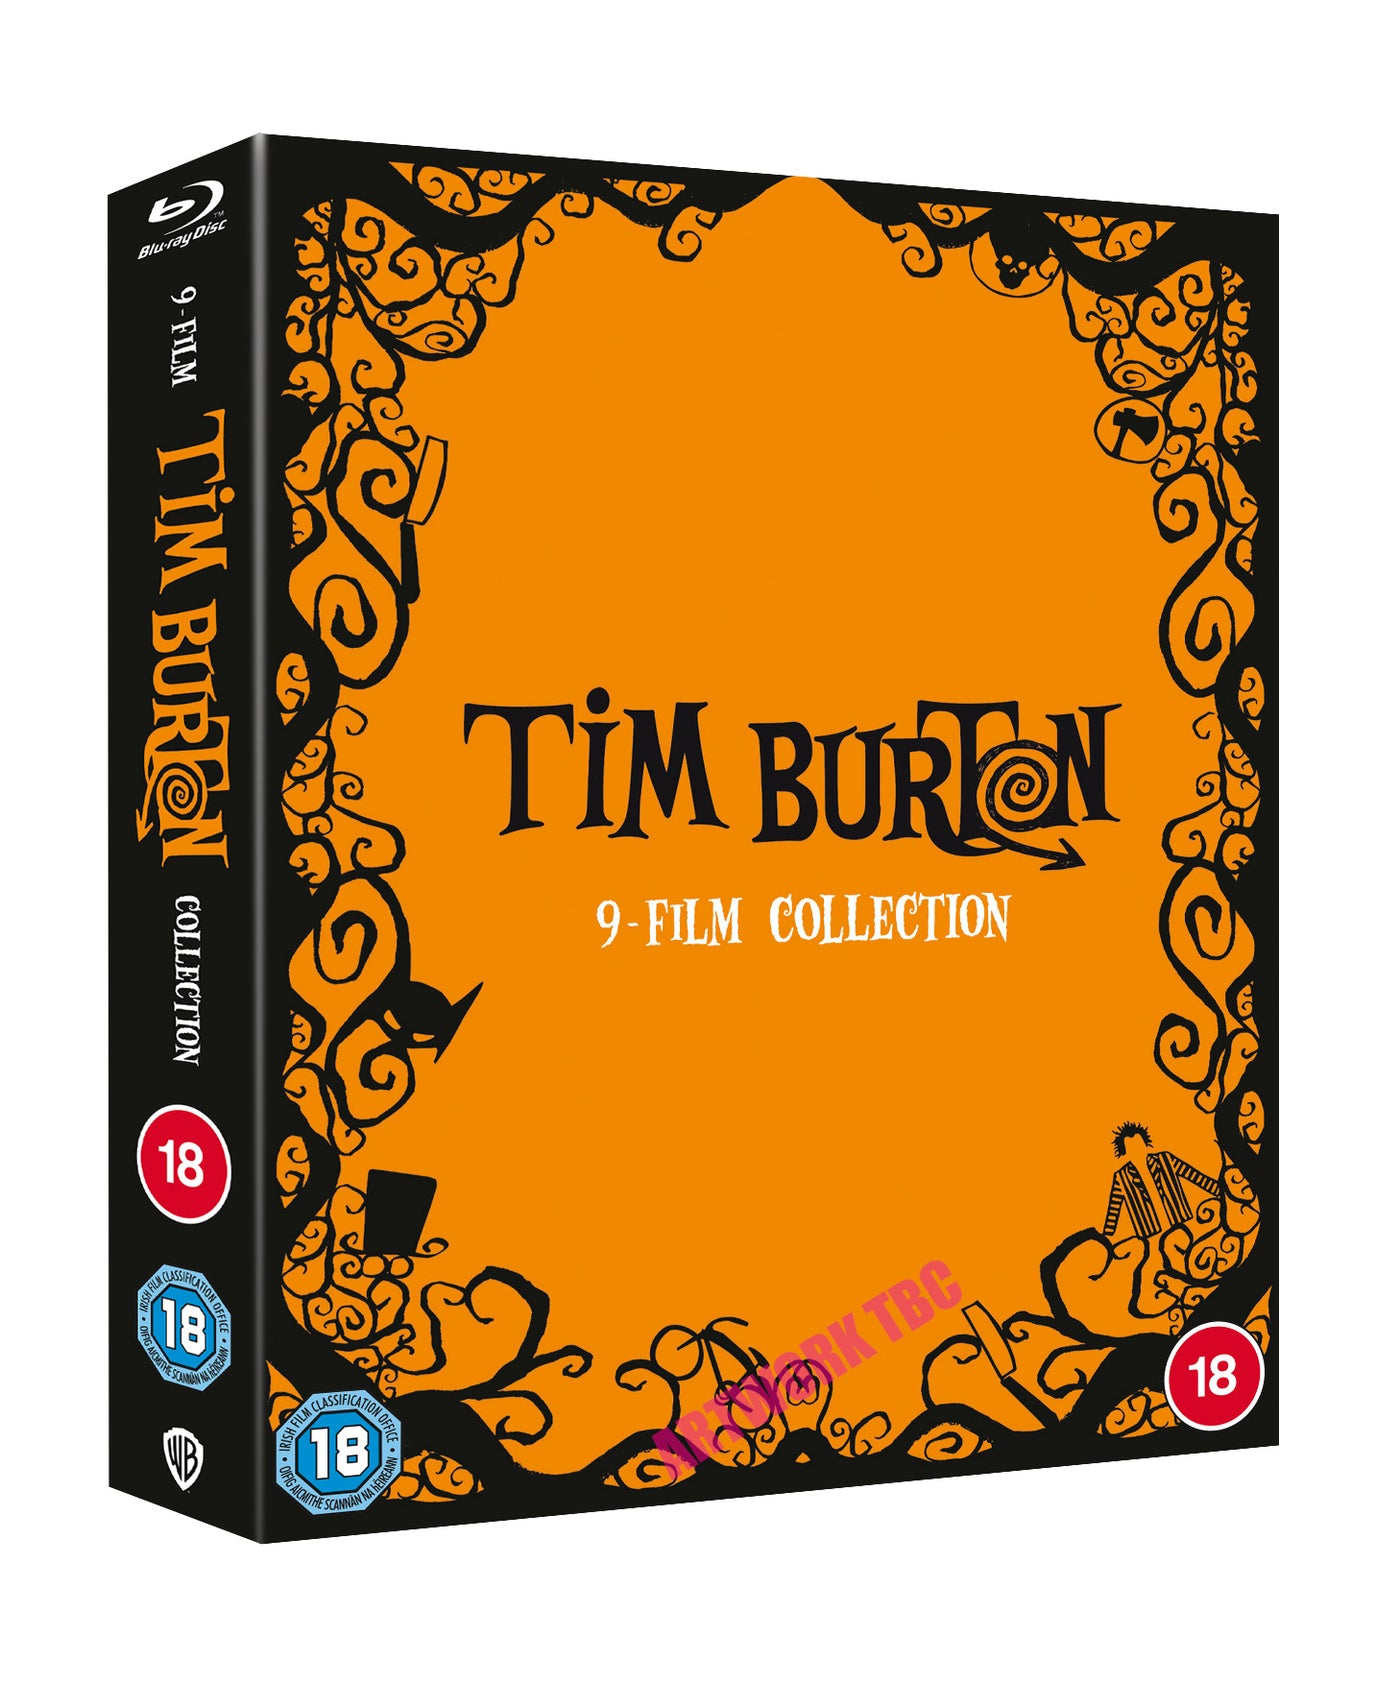 Tim Burton 9-film Collection (Blu-ray) (2012)